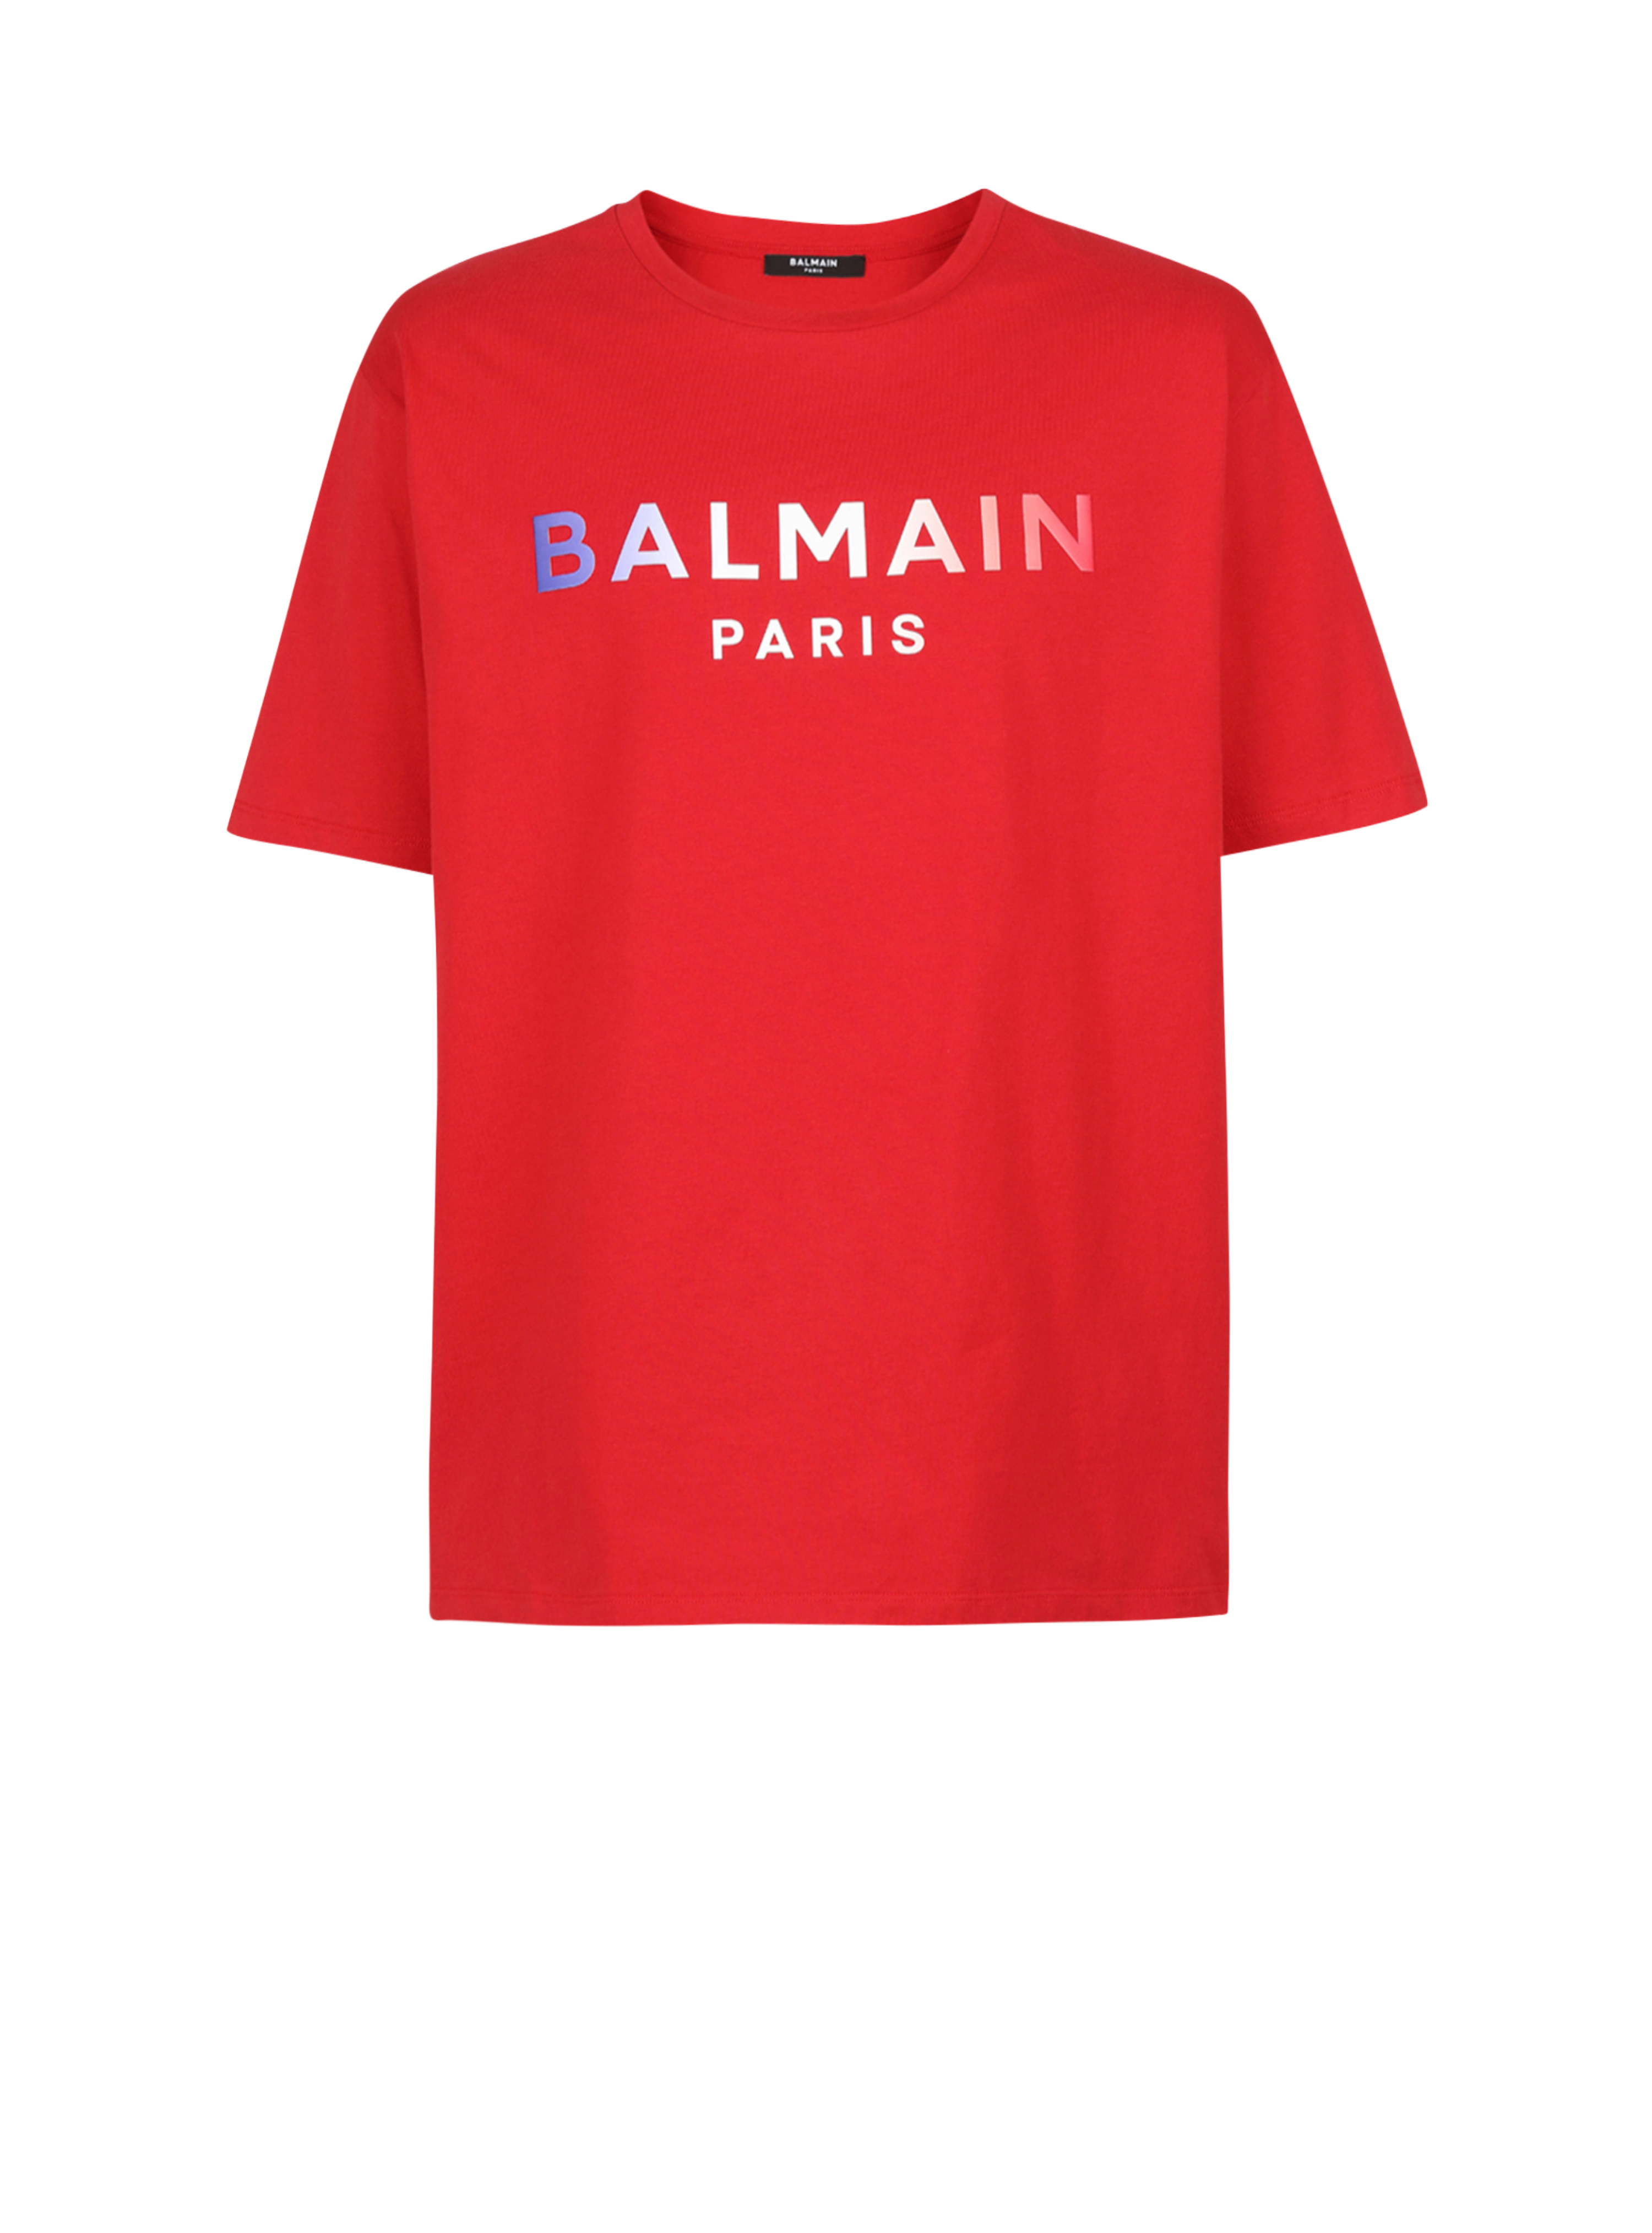 HIGH SUMMER CAPSULE -Cotton T-shirt with Balmain Paris tie-dye logo print, red